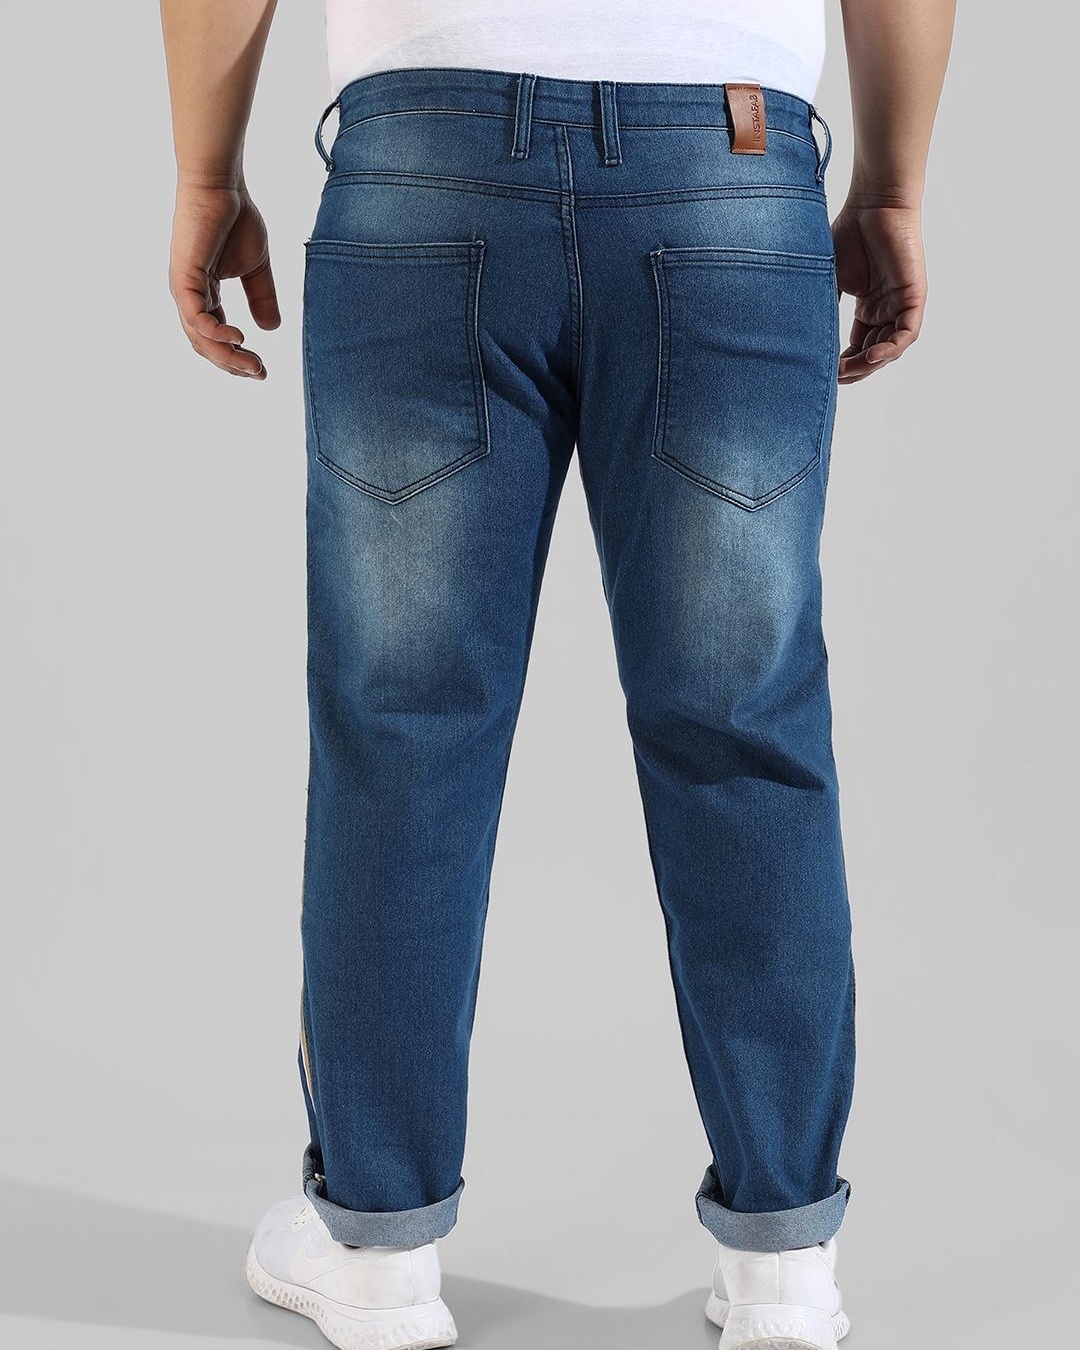 Shop Men's Blue Striped Distressed Jeans-Back